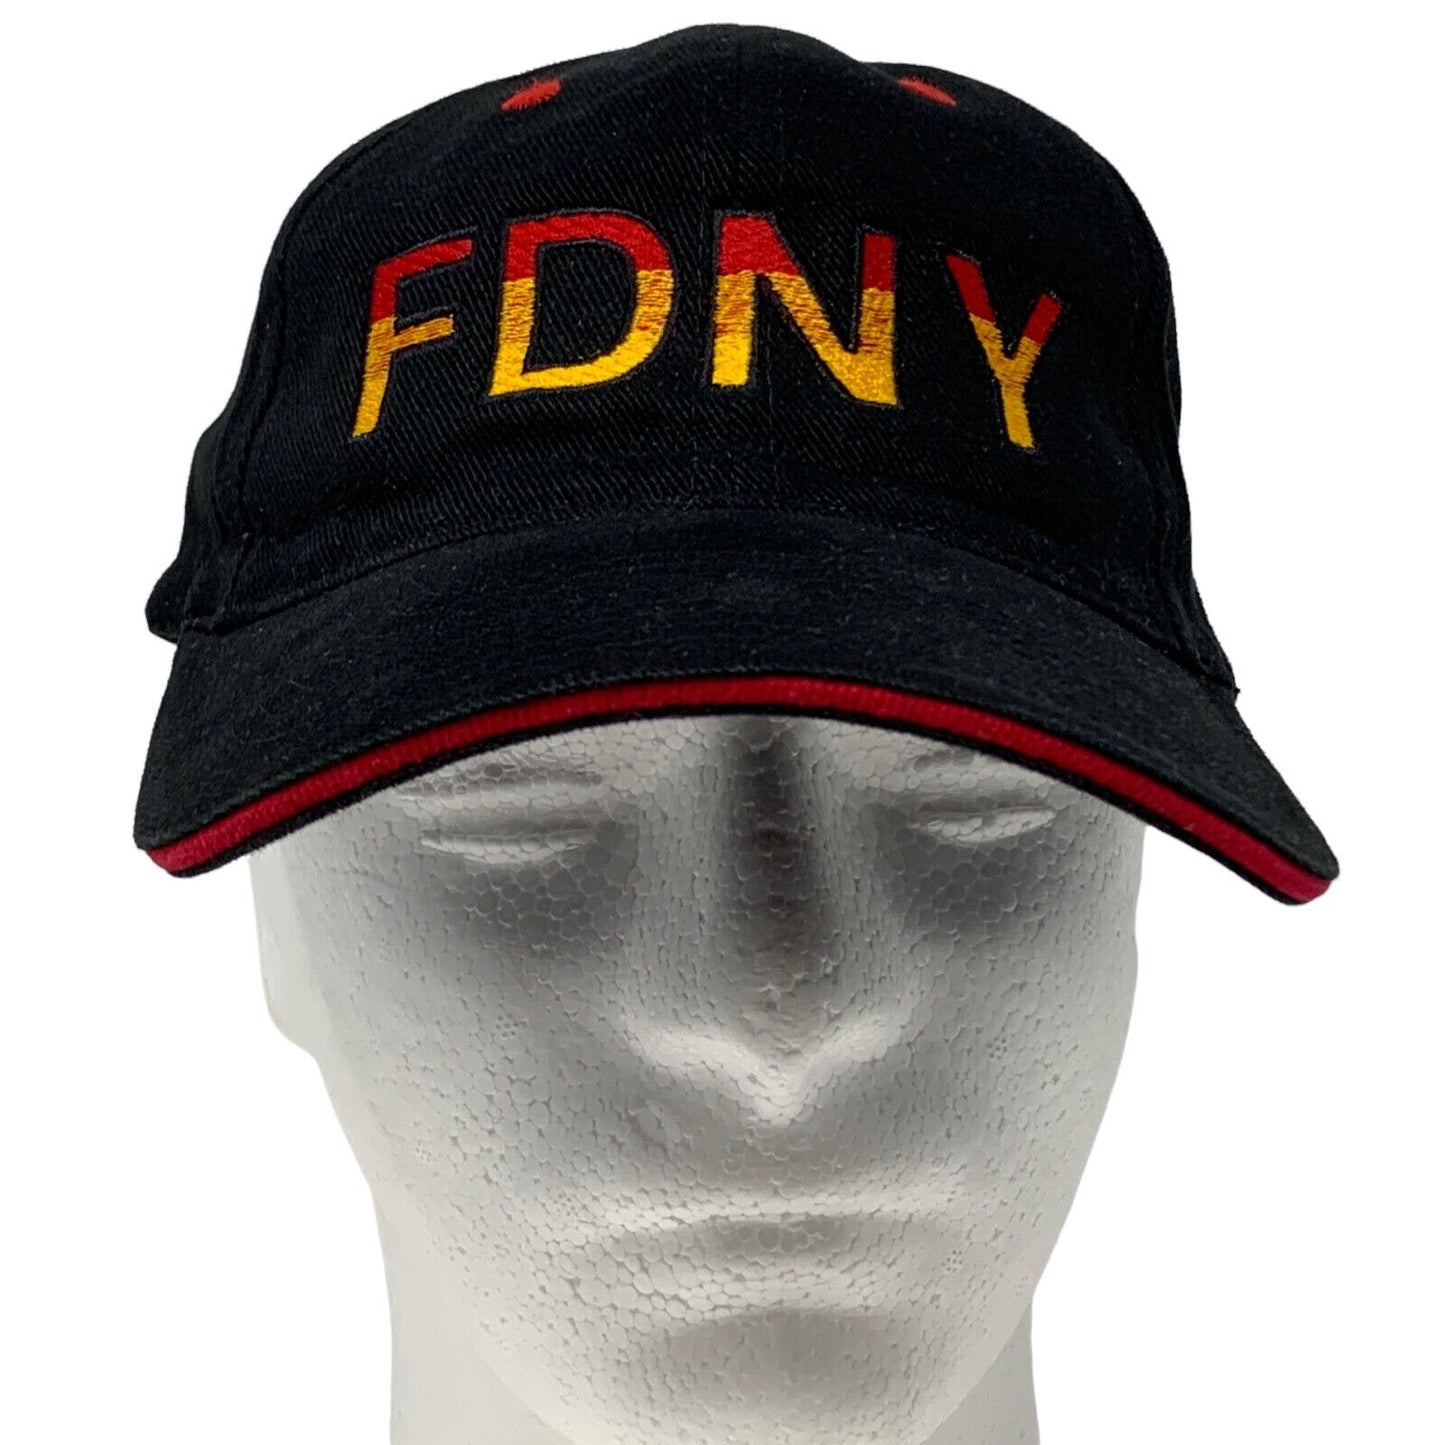 FDNY Fire Department Dept New York Strapback Hat Black 6 Six Panel Baseball Cap